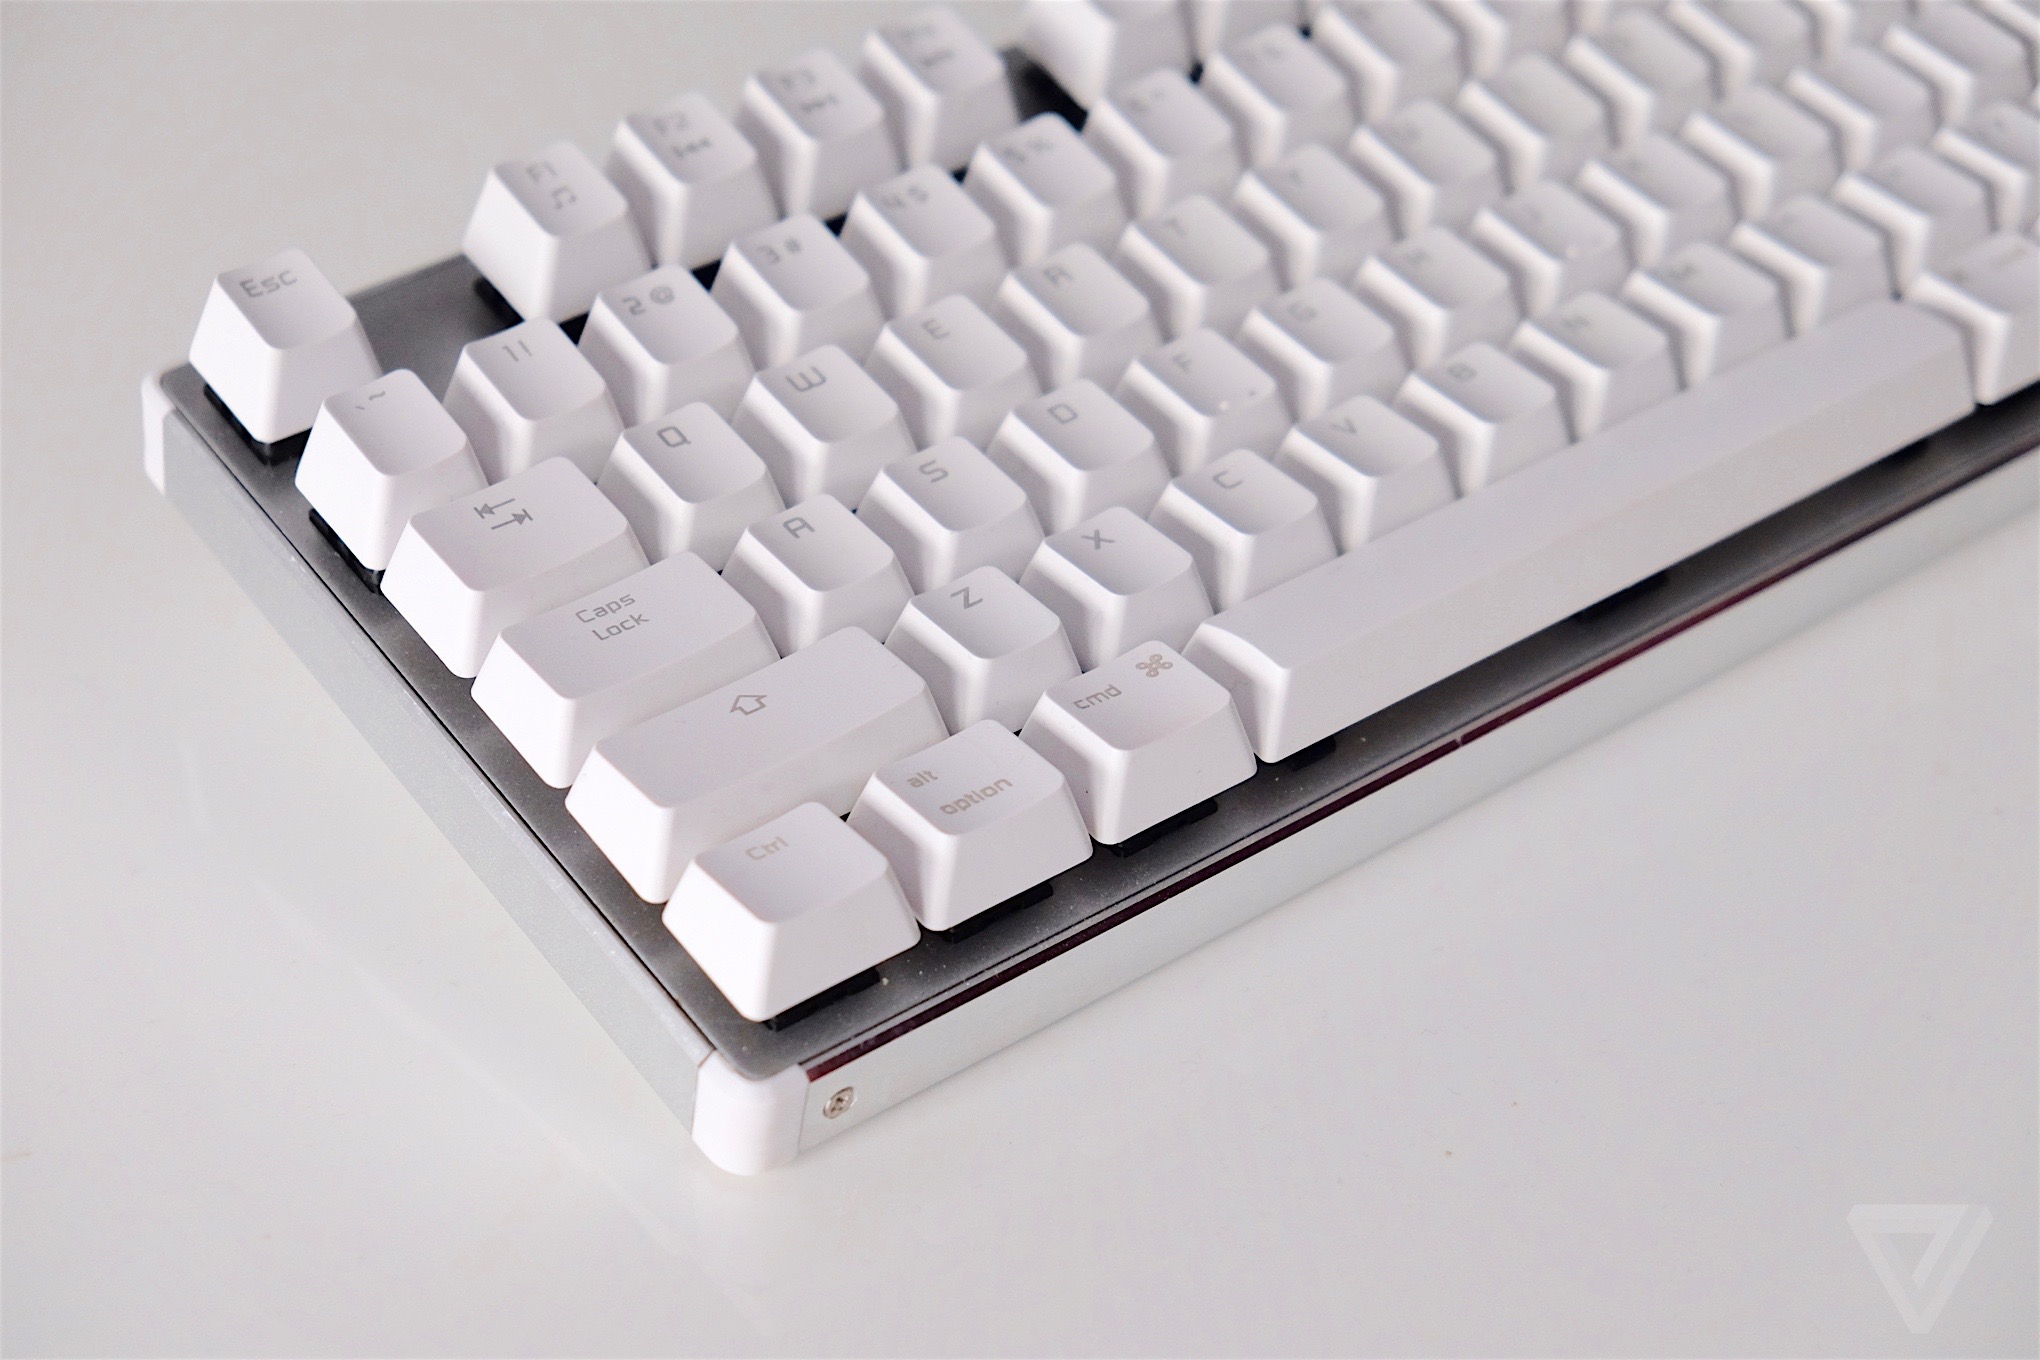 Best Mechanical Keyboard For Mac